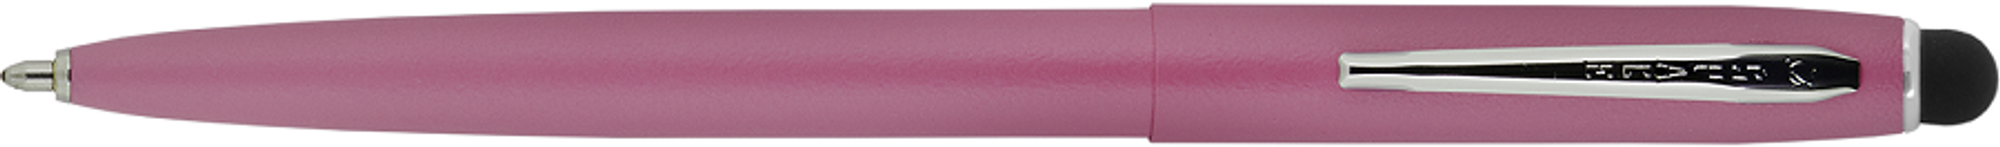 Fisher Space Pen M4PKCT Pink Body, Chrome Clip w/ Stylus